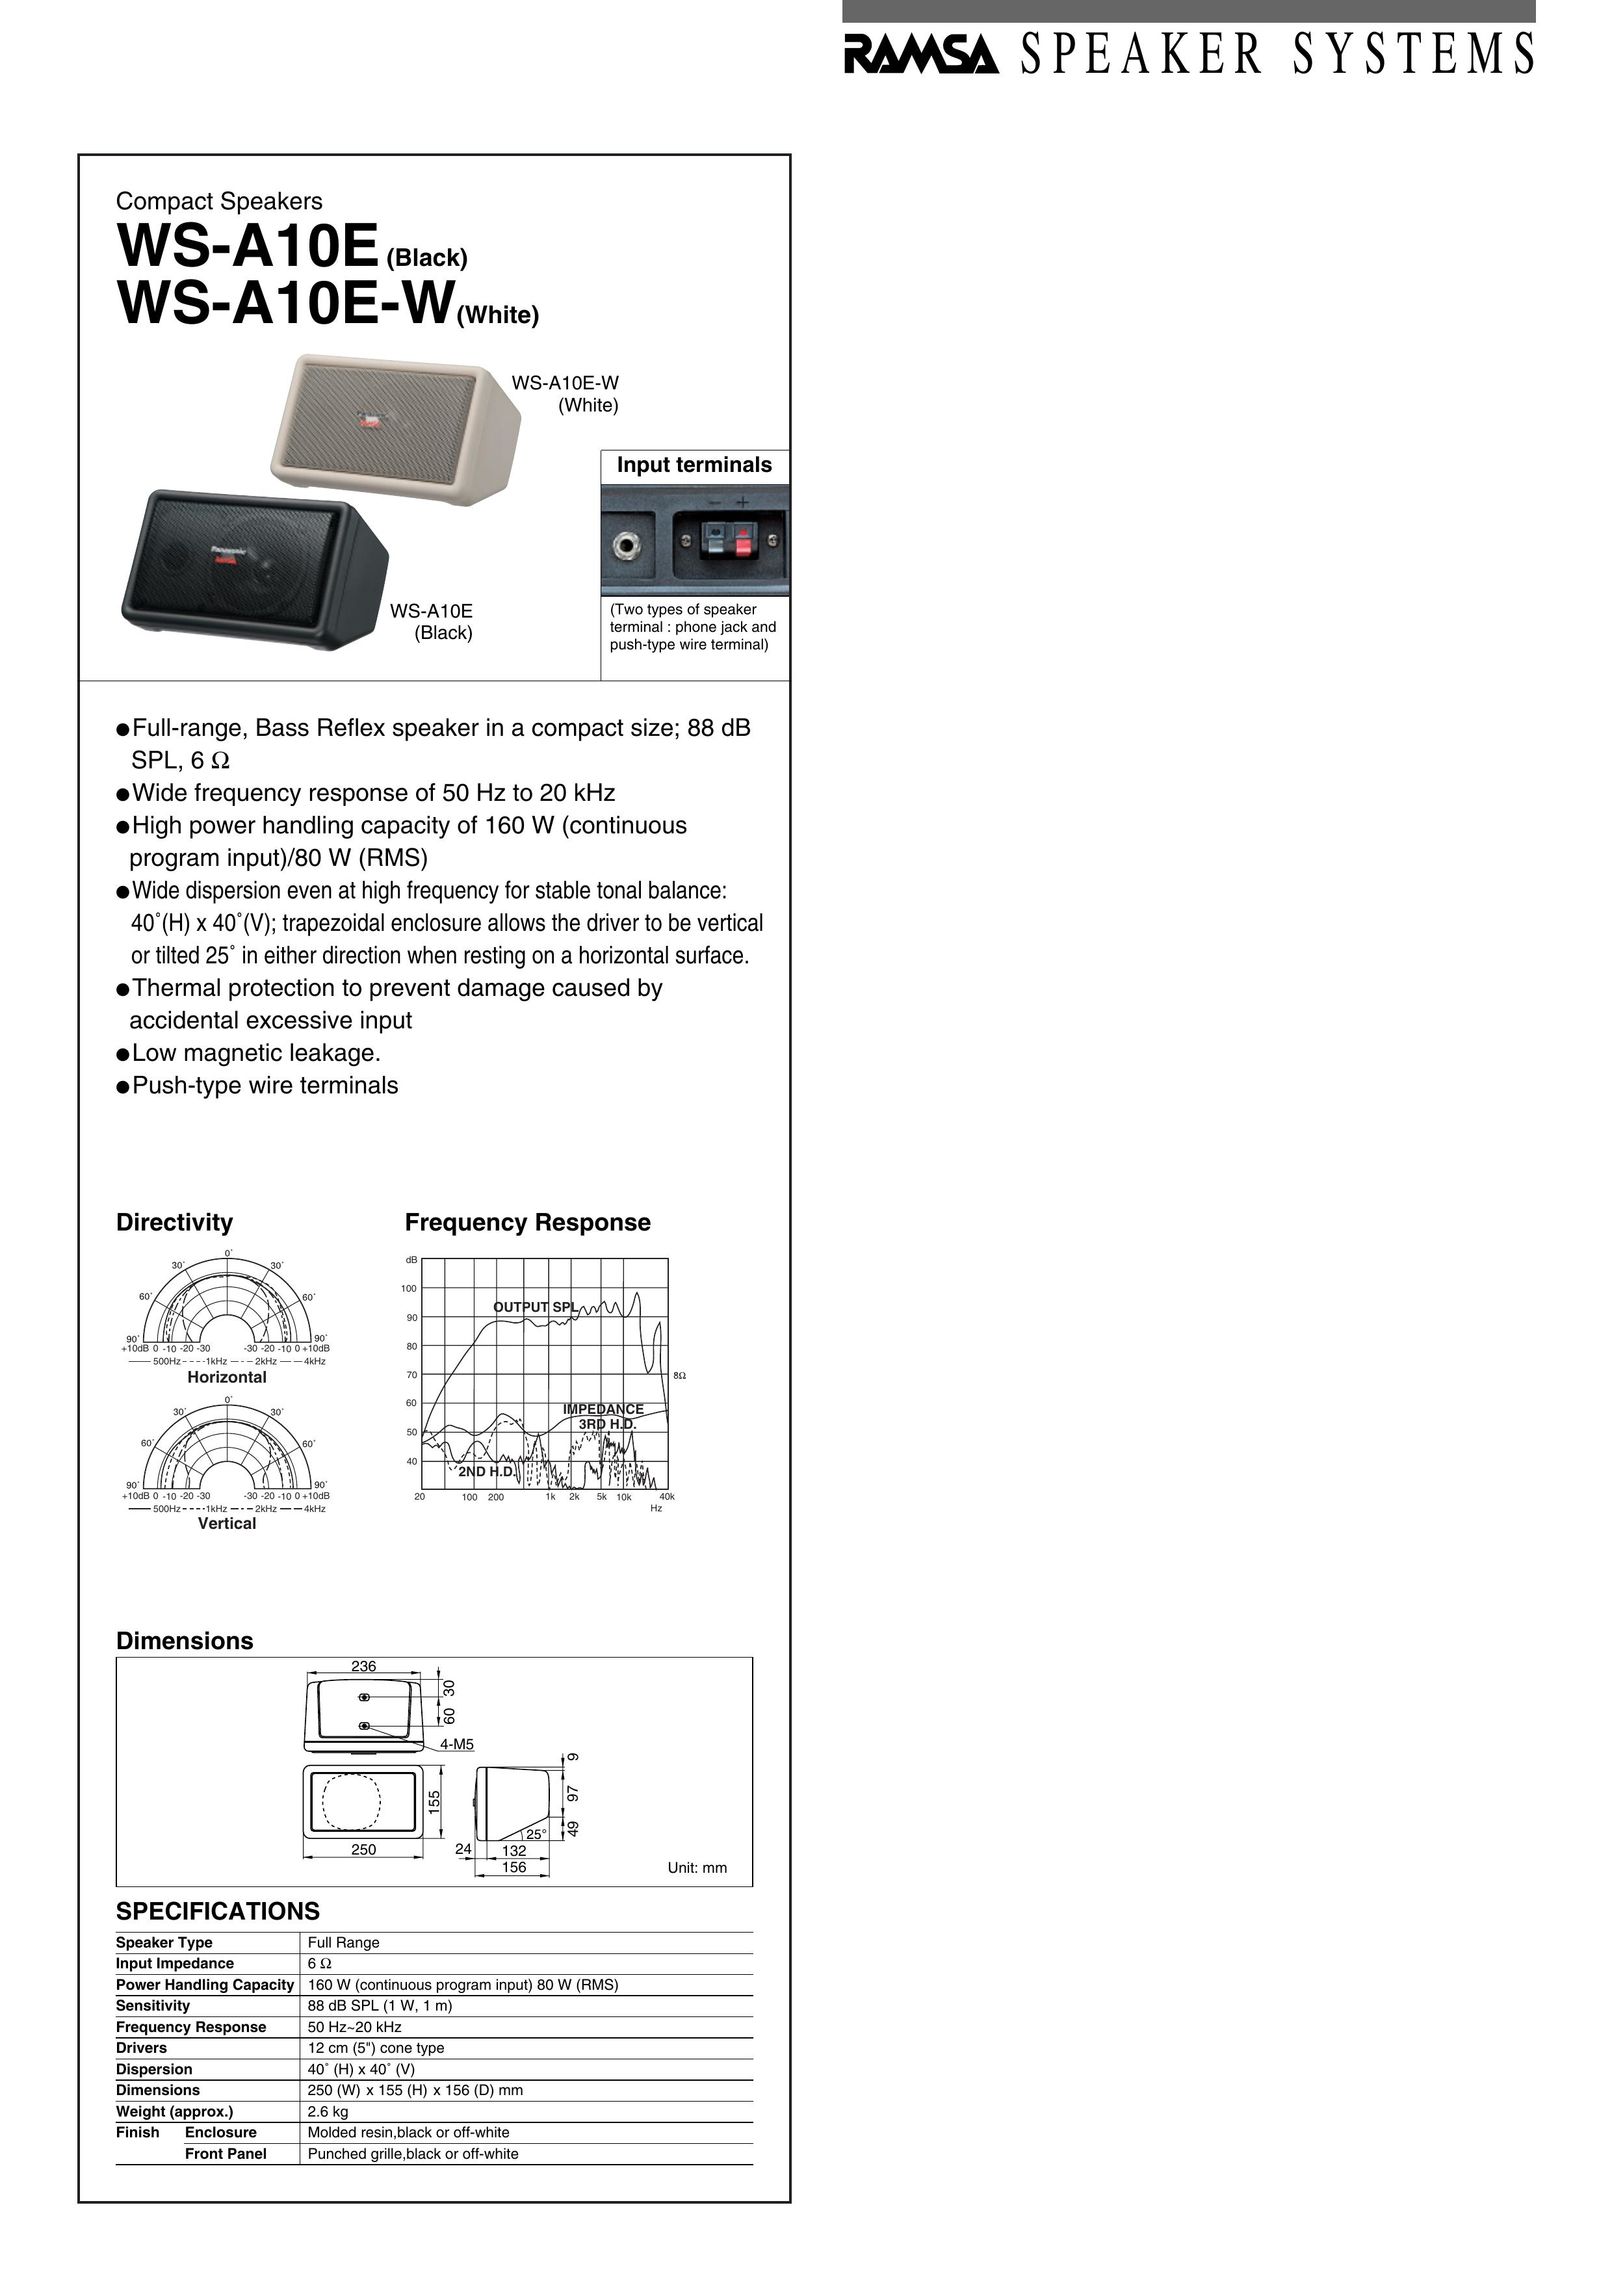 Panasonic WS-A10E Portable Speaker User Manual